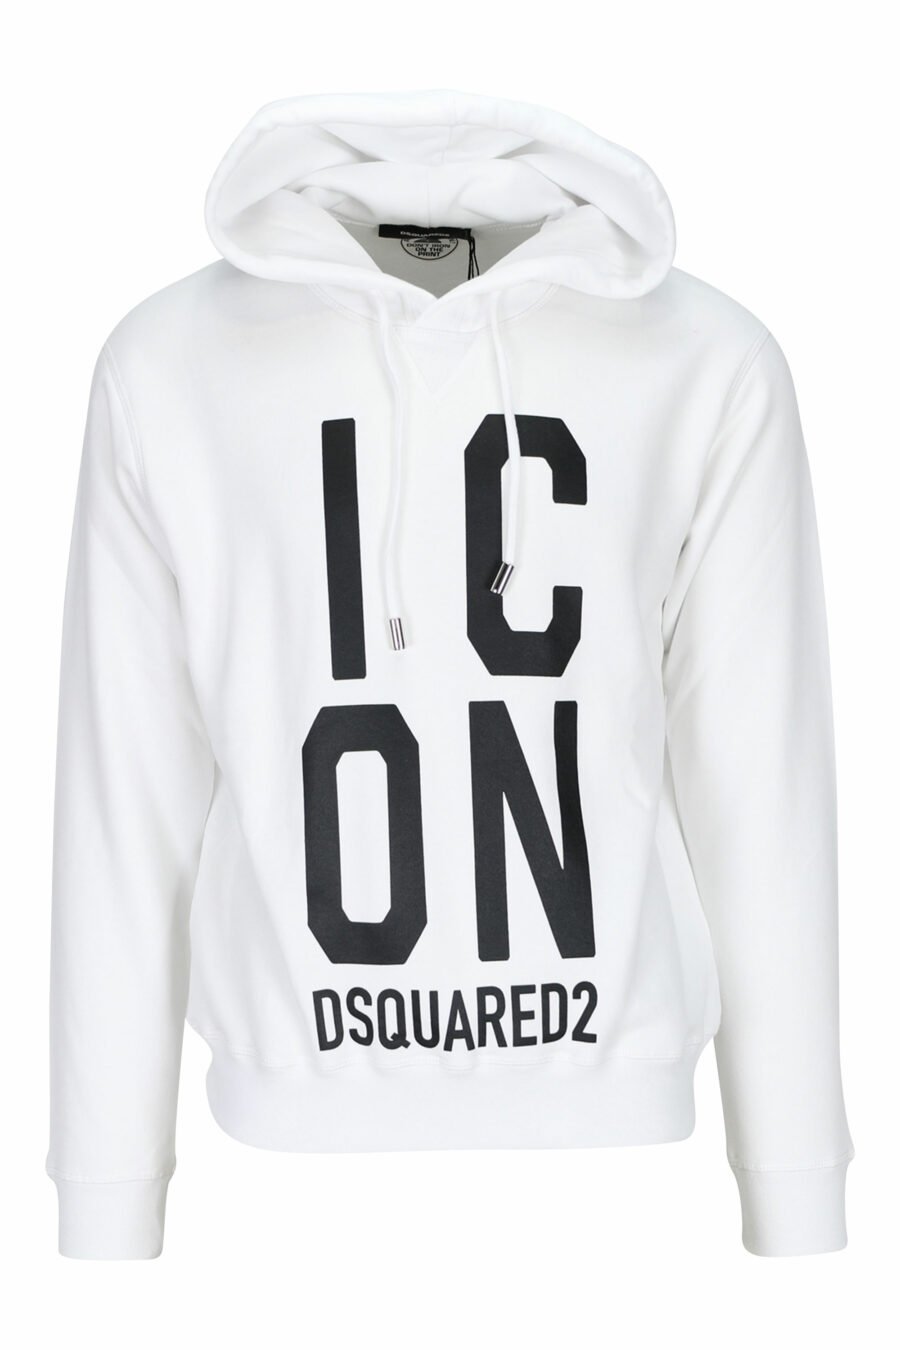 White hooded sweatshirt with square "icon" maxilogo - 8052134982570